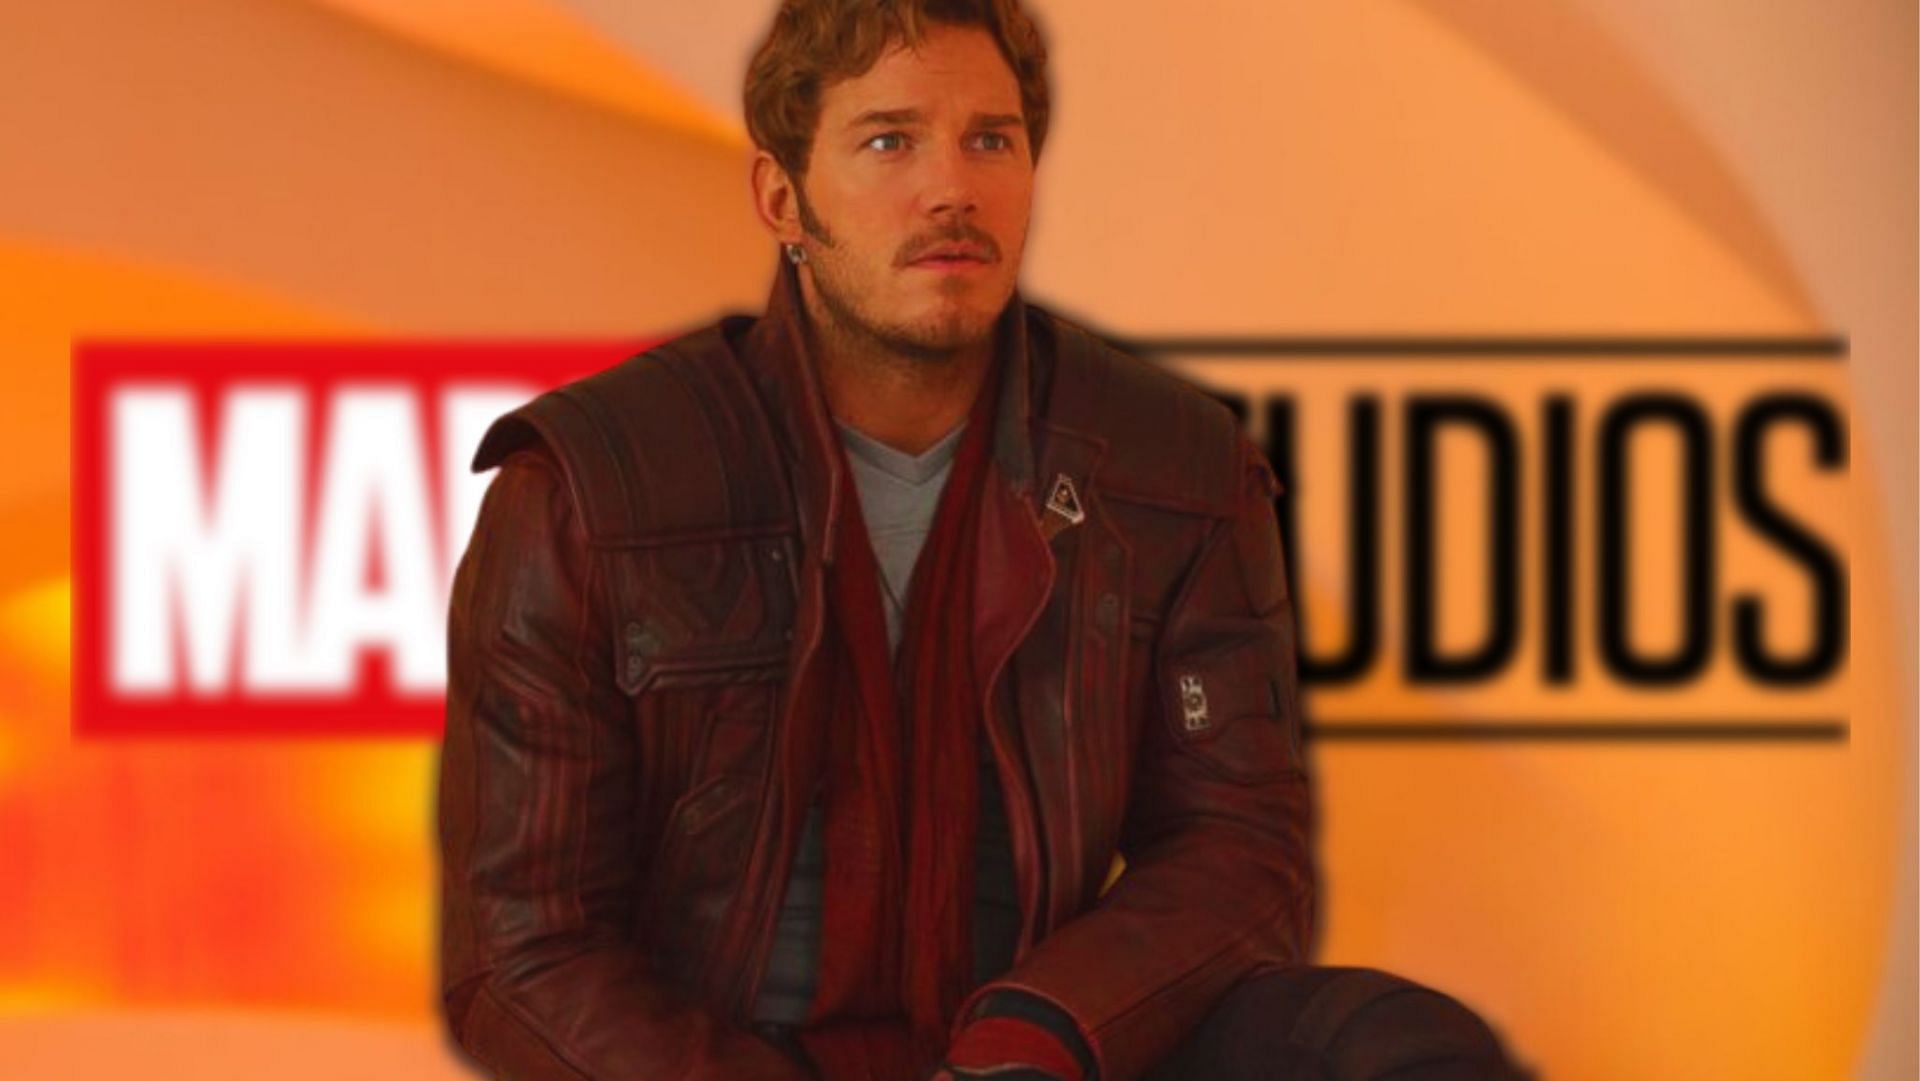 Chris Pratt as Star-Lord drops the MCU